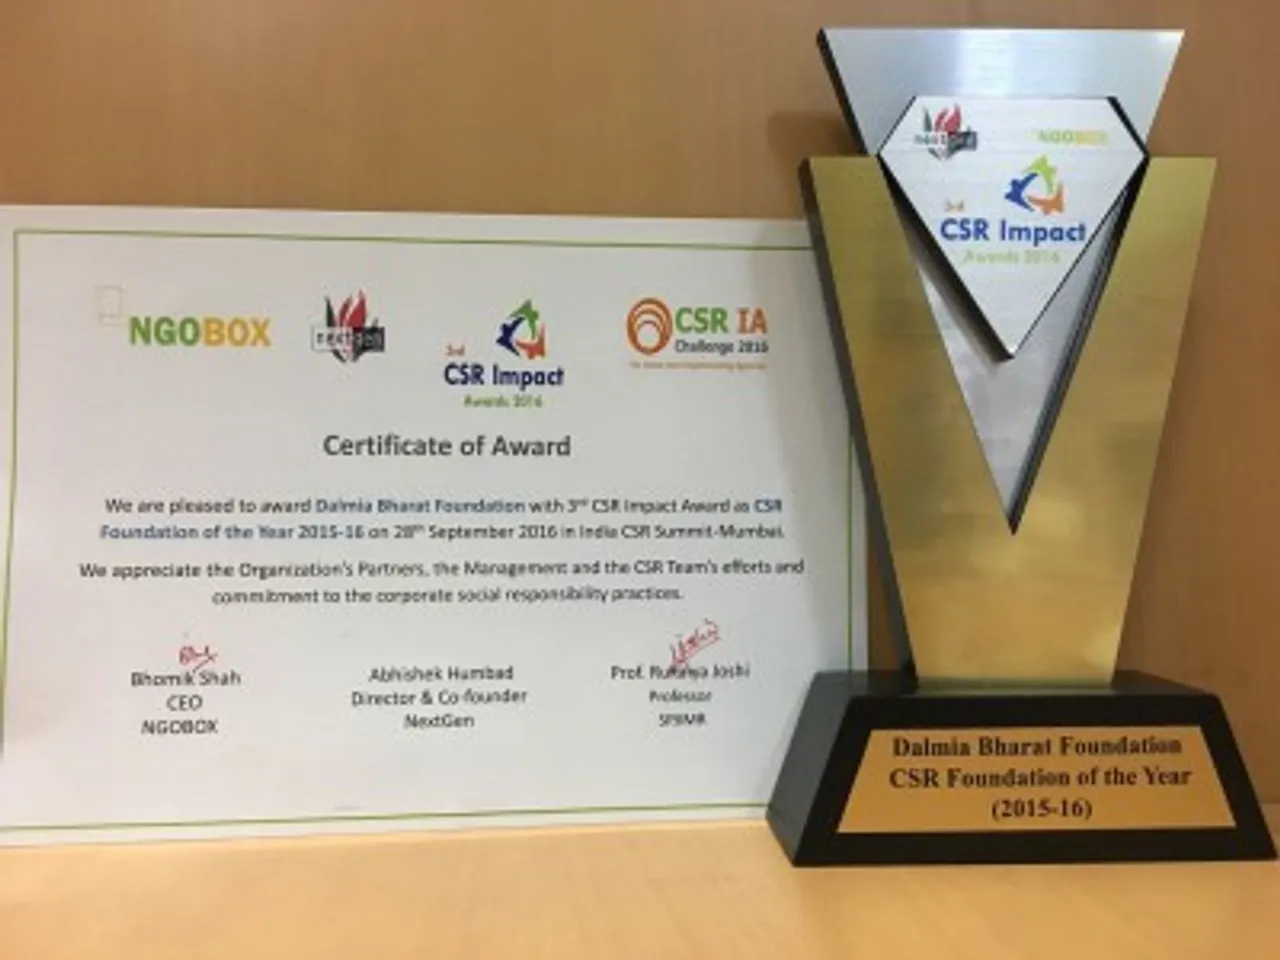 Dalmia Bharat Foundation Receives ‘Foundation of the Year’ Award